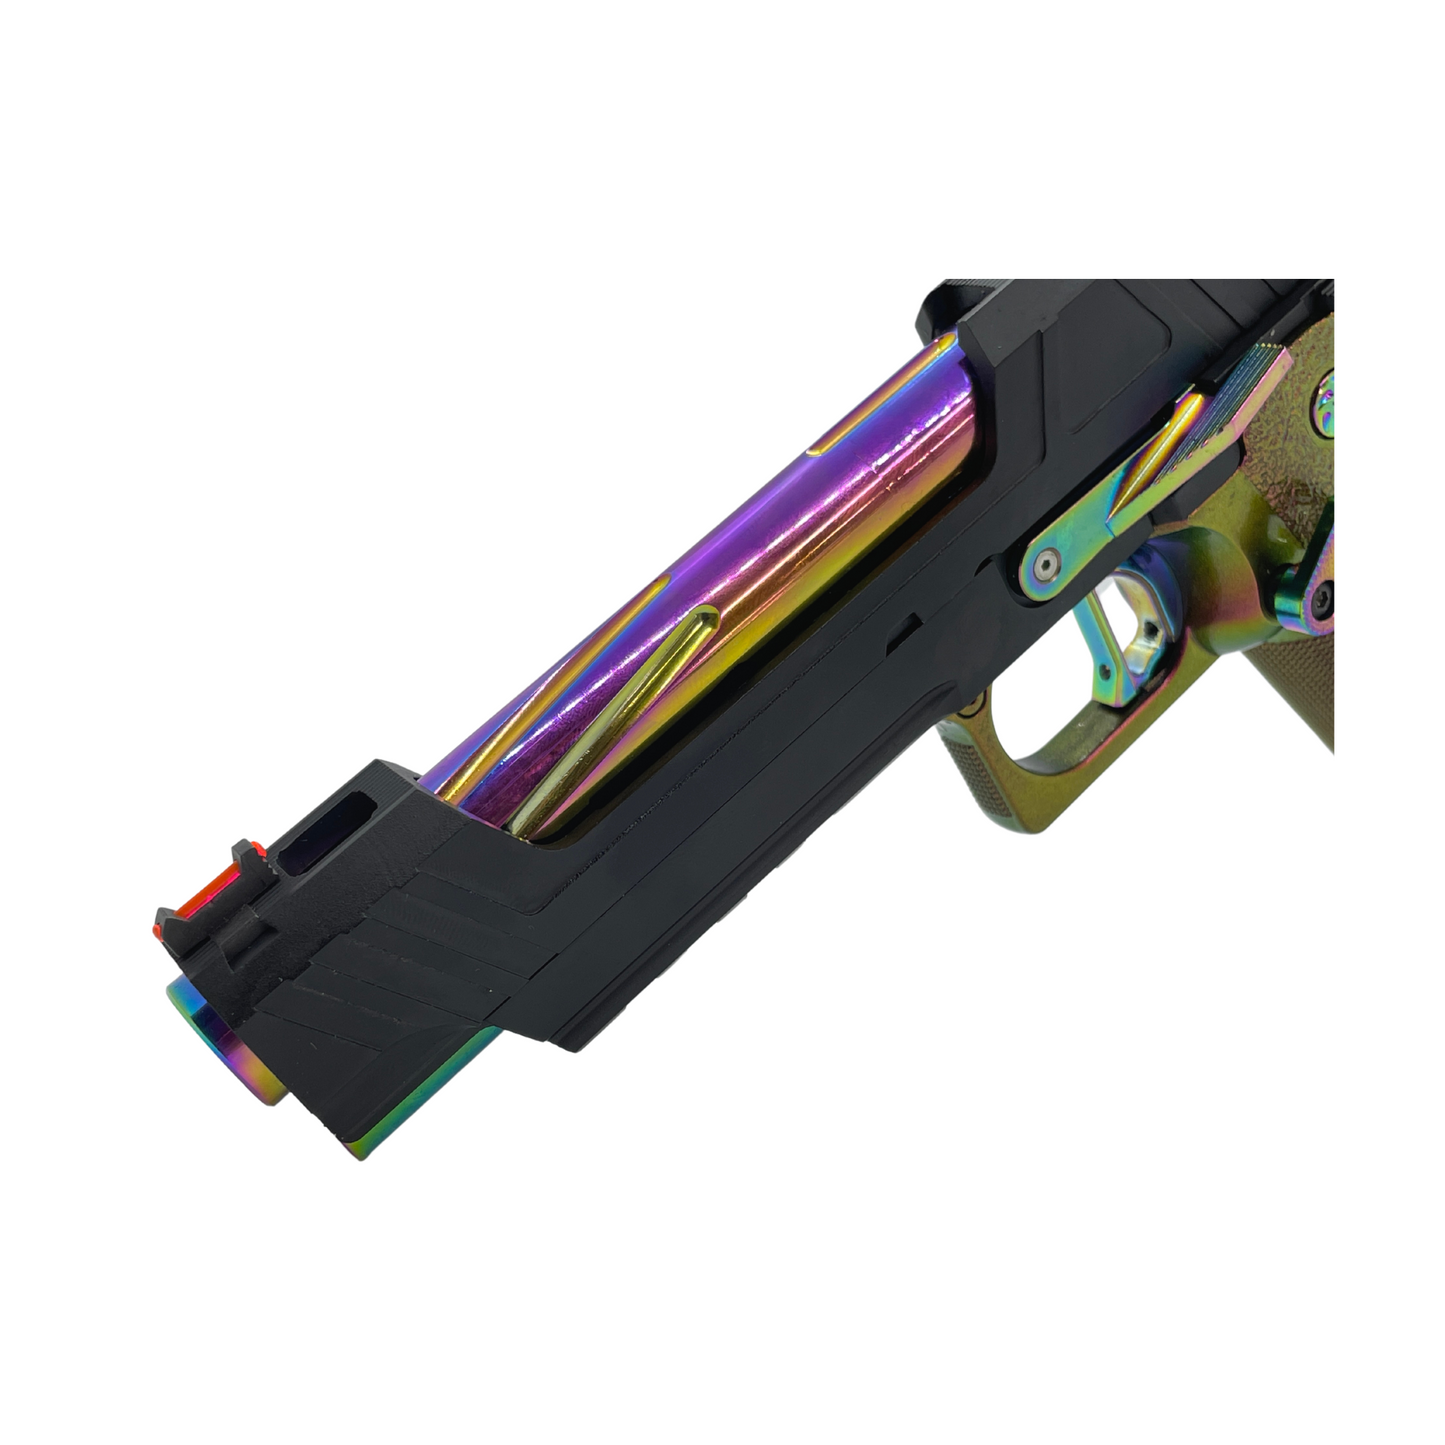 "Skyrim" Custom GBU 5.1 Comp Hi-Capa Pistol - Gel Blaster